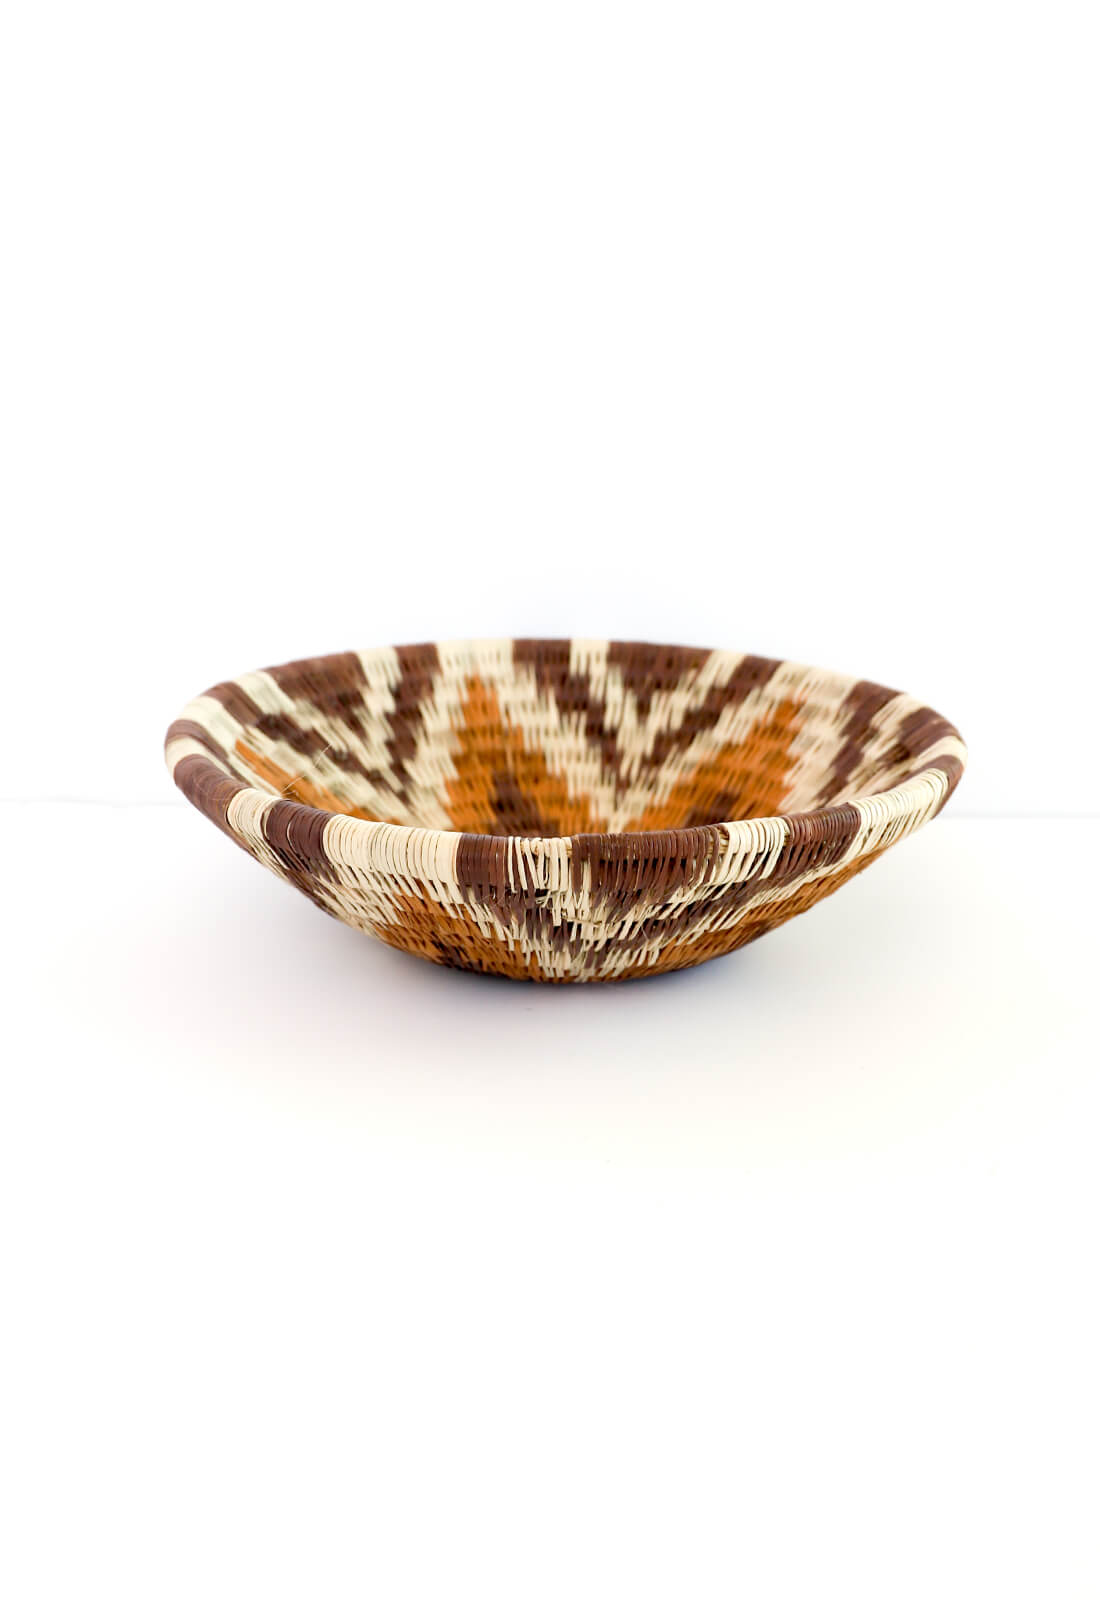 Vintage Handwoven Bayei Plateau Basket - Small, 8